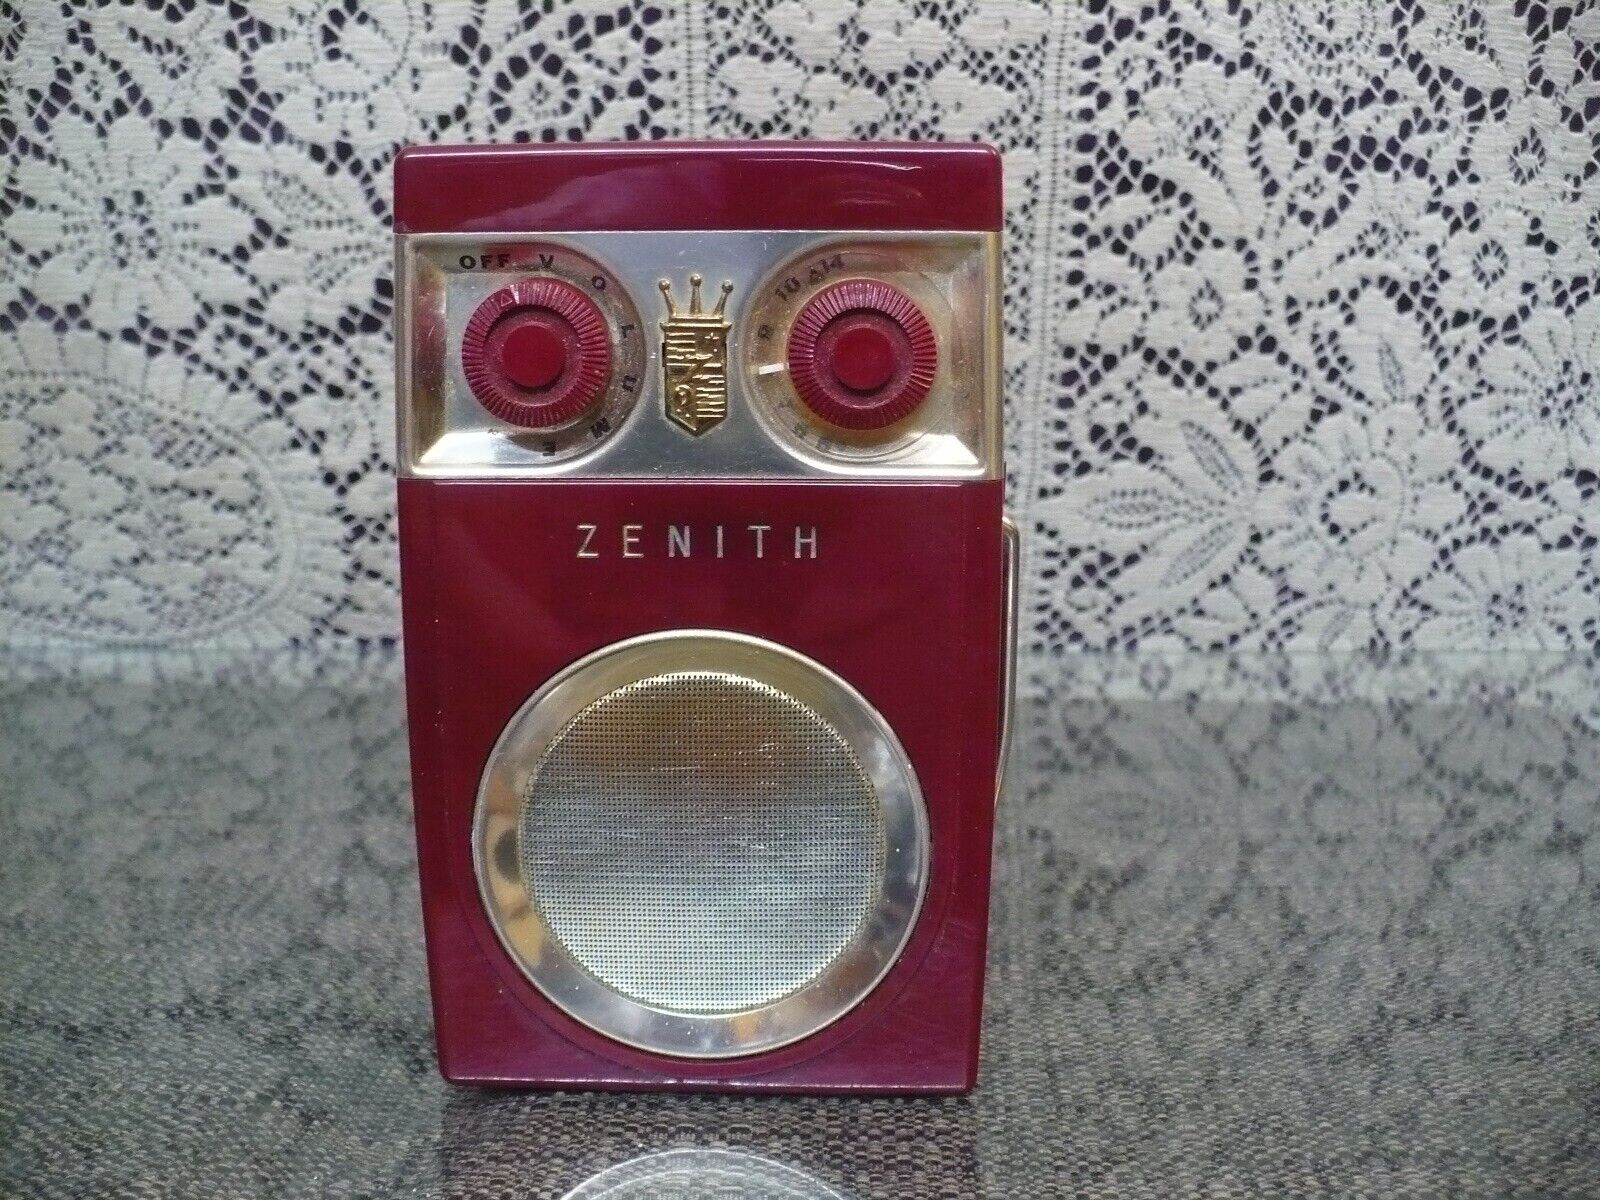 Zenith royal 500 transistor radio